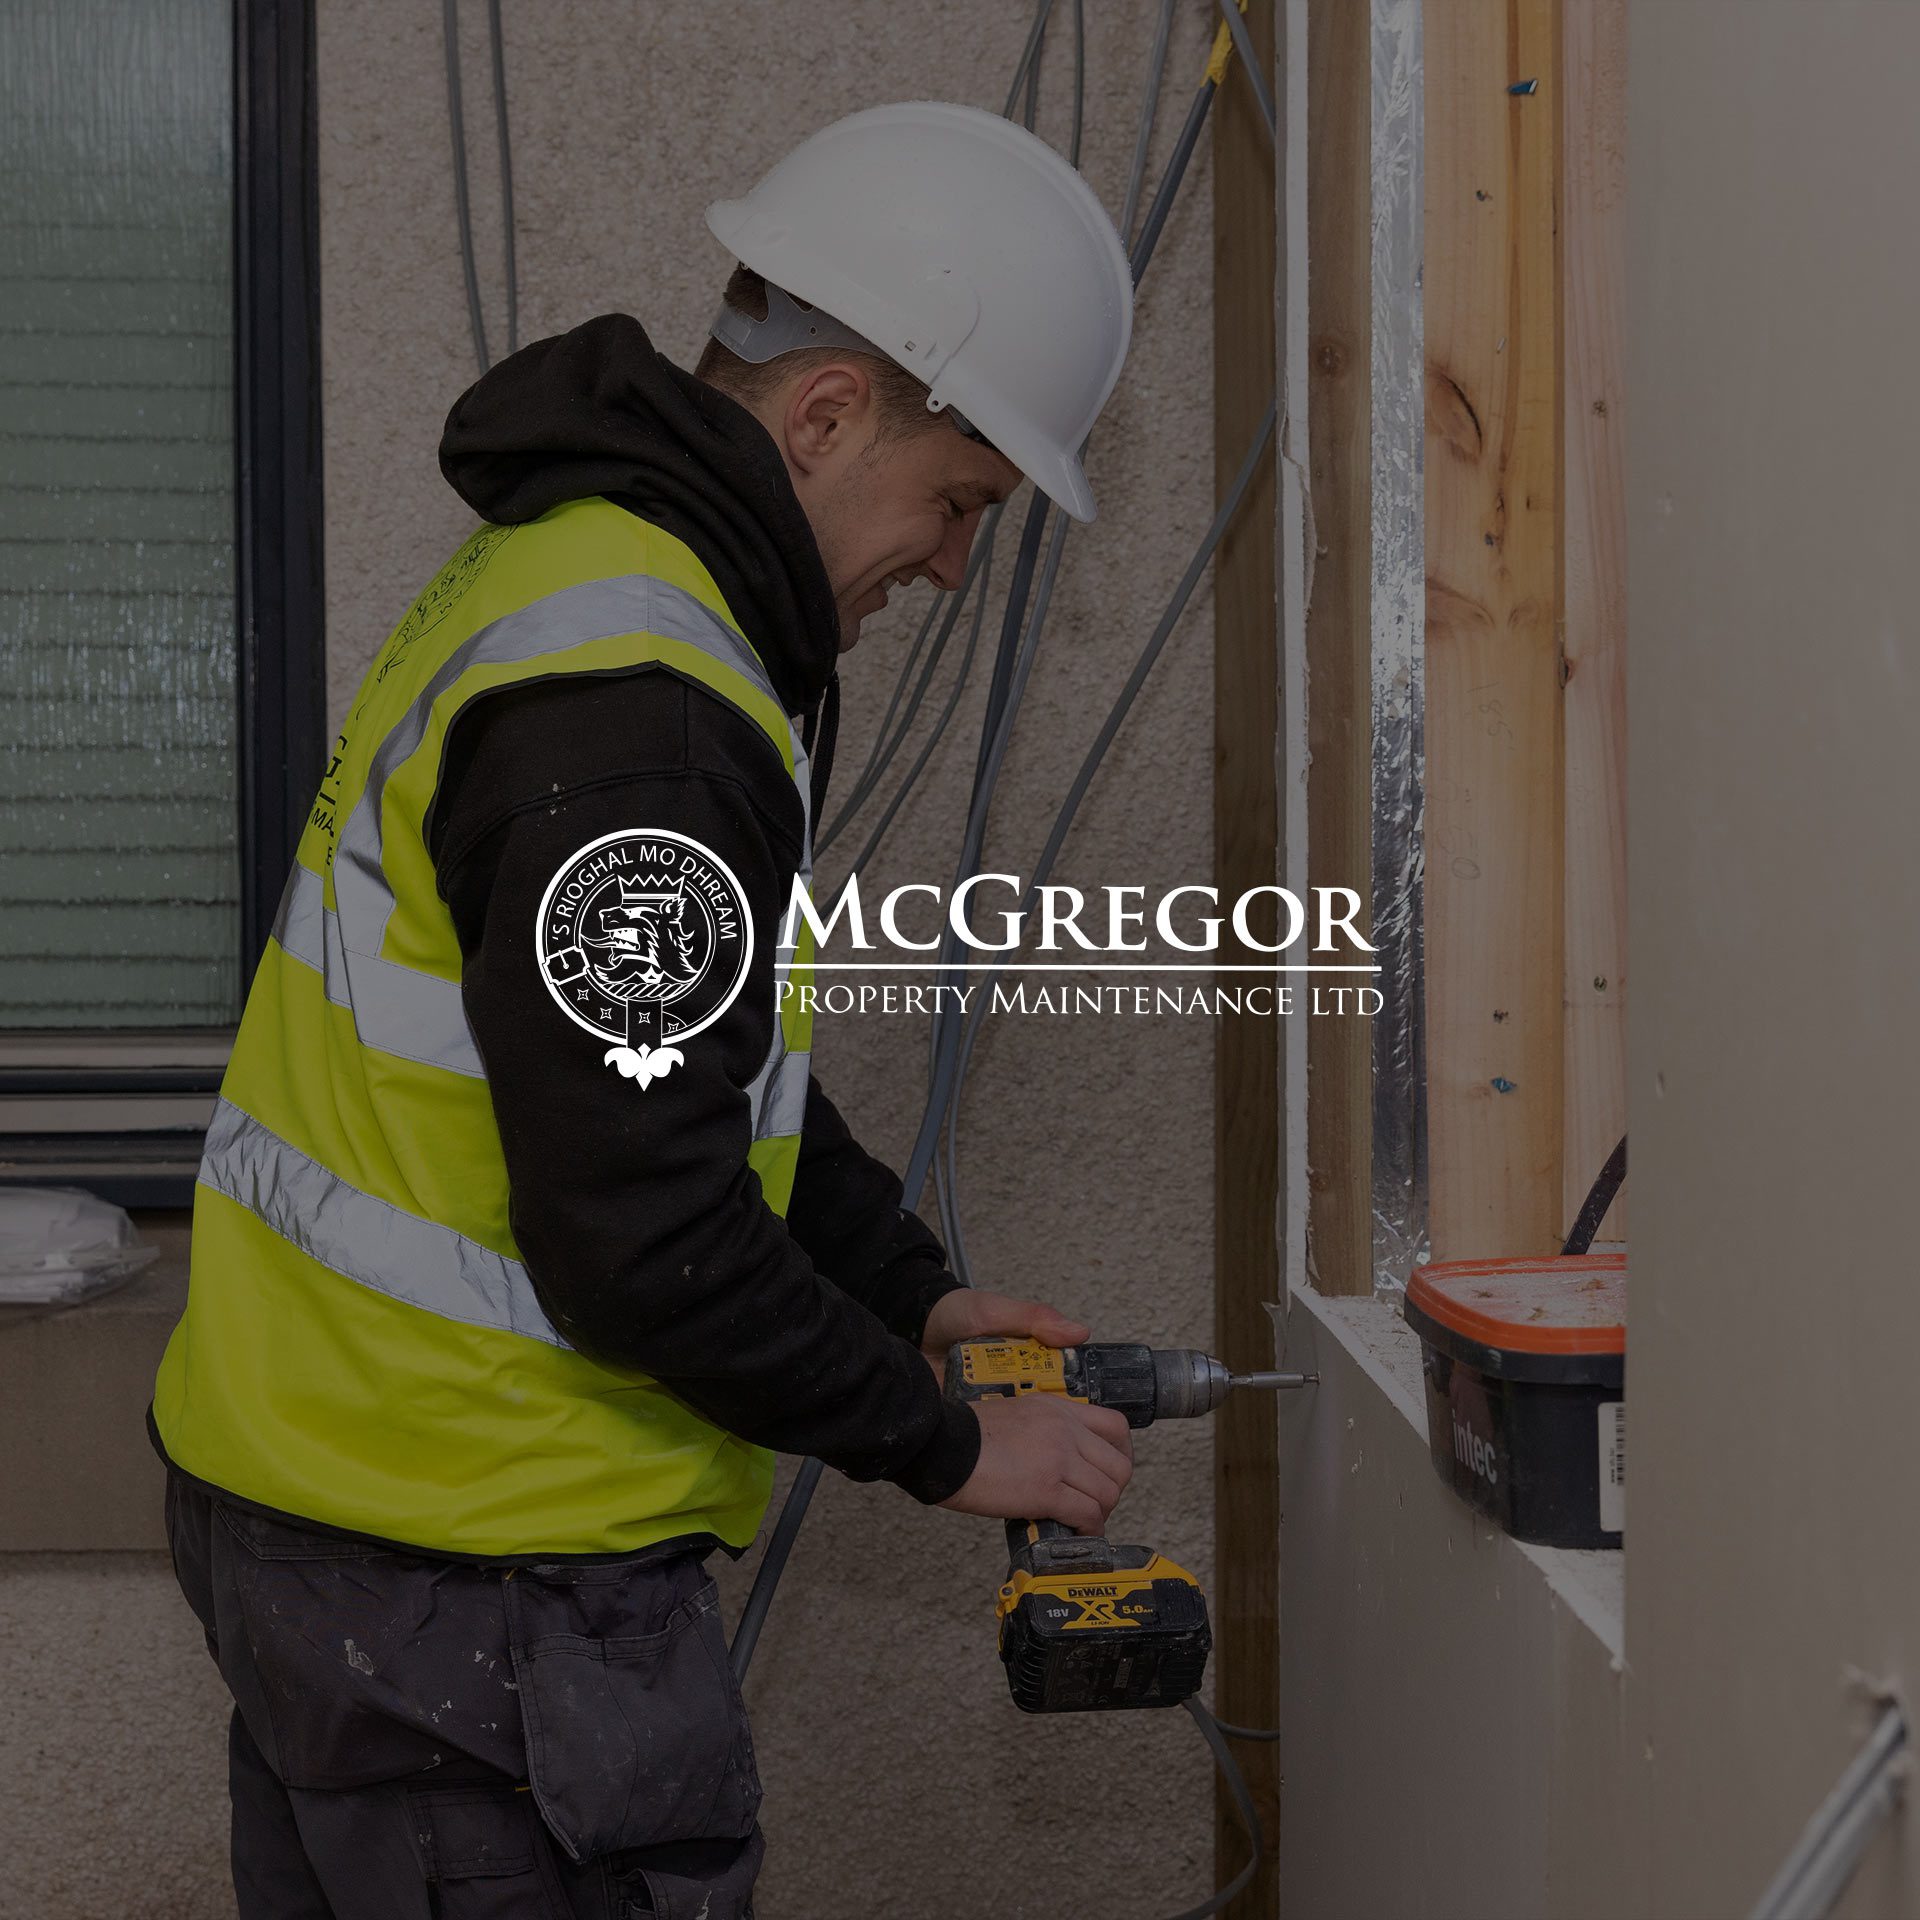 McGregor Property Maintenance